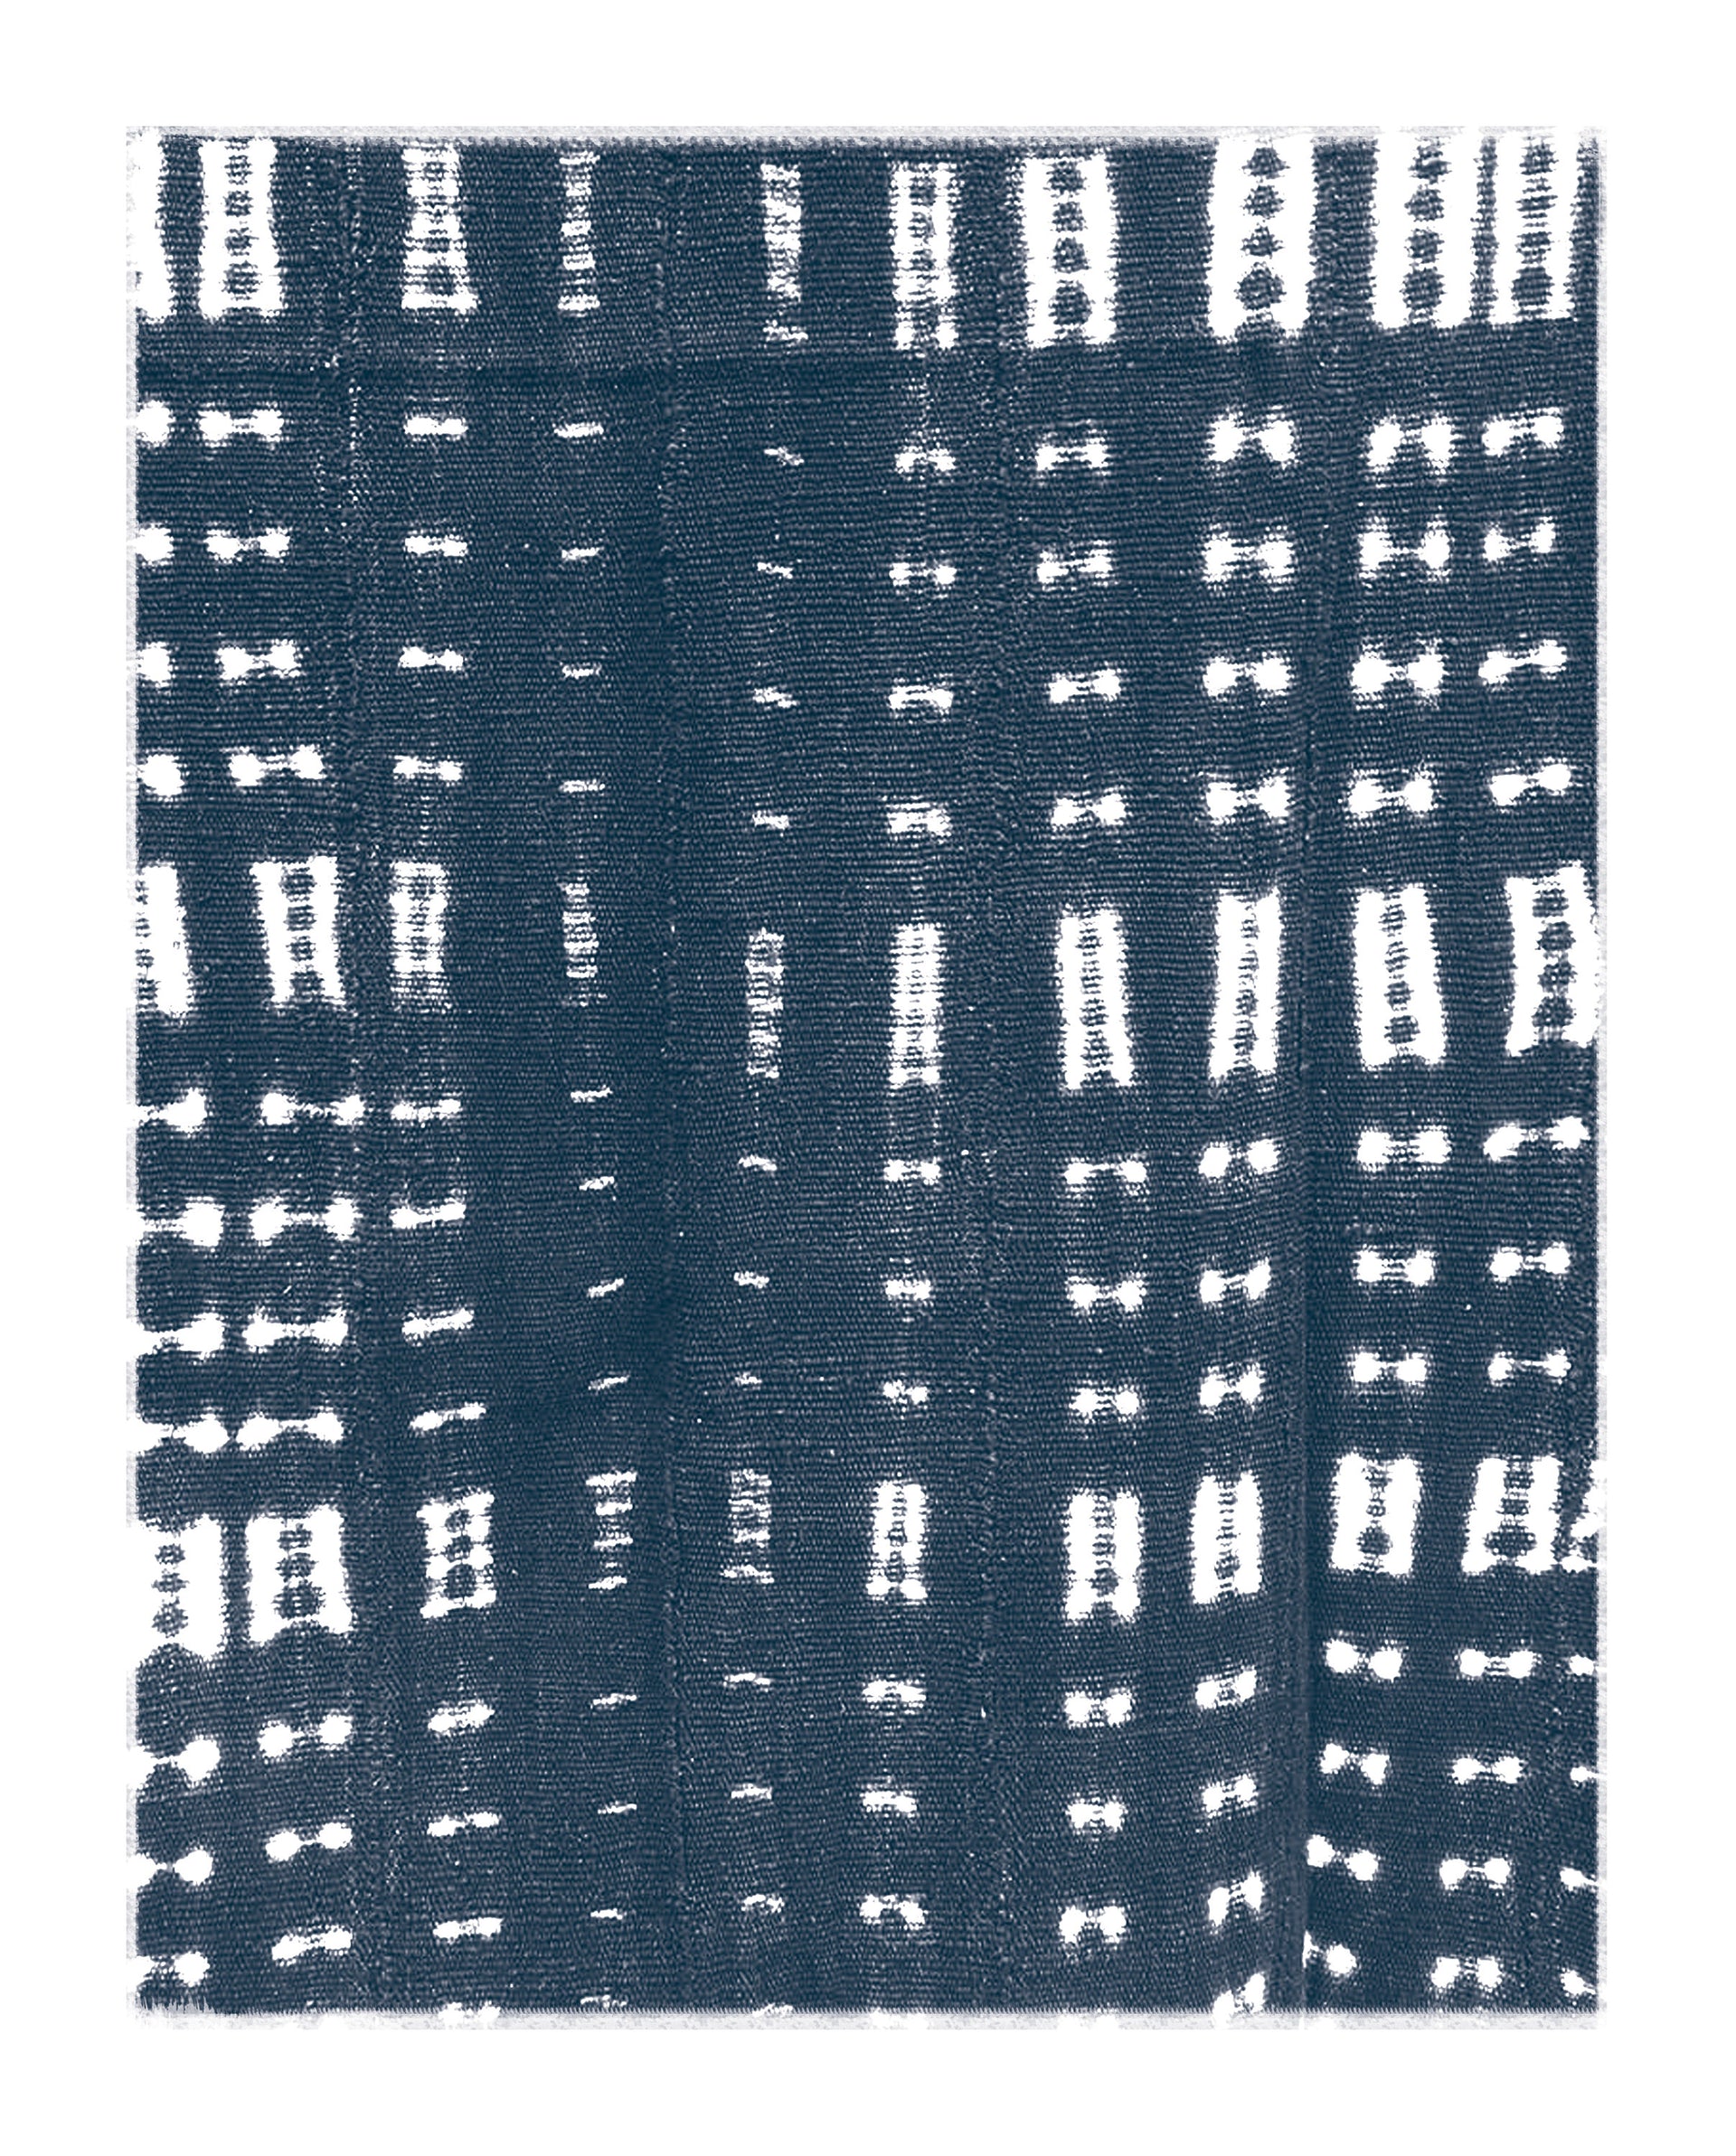 mud cloth fabric print by Gert & Co